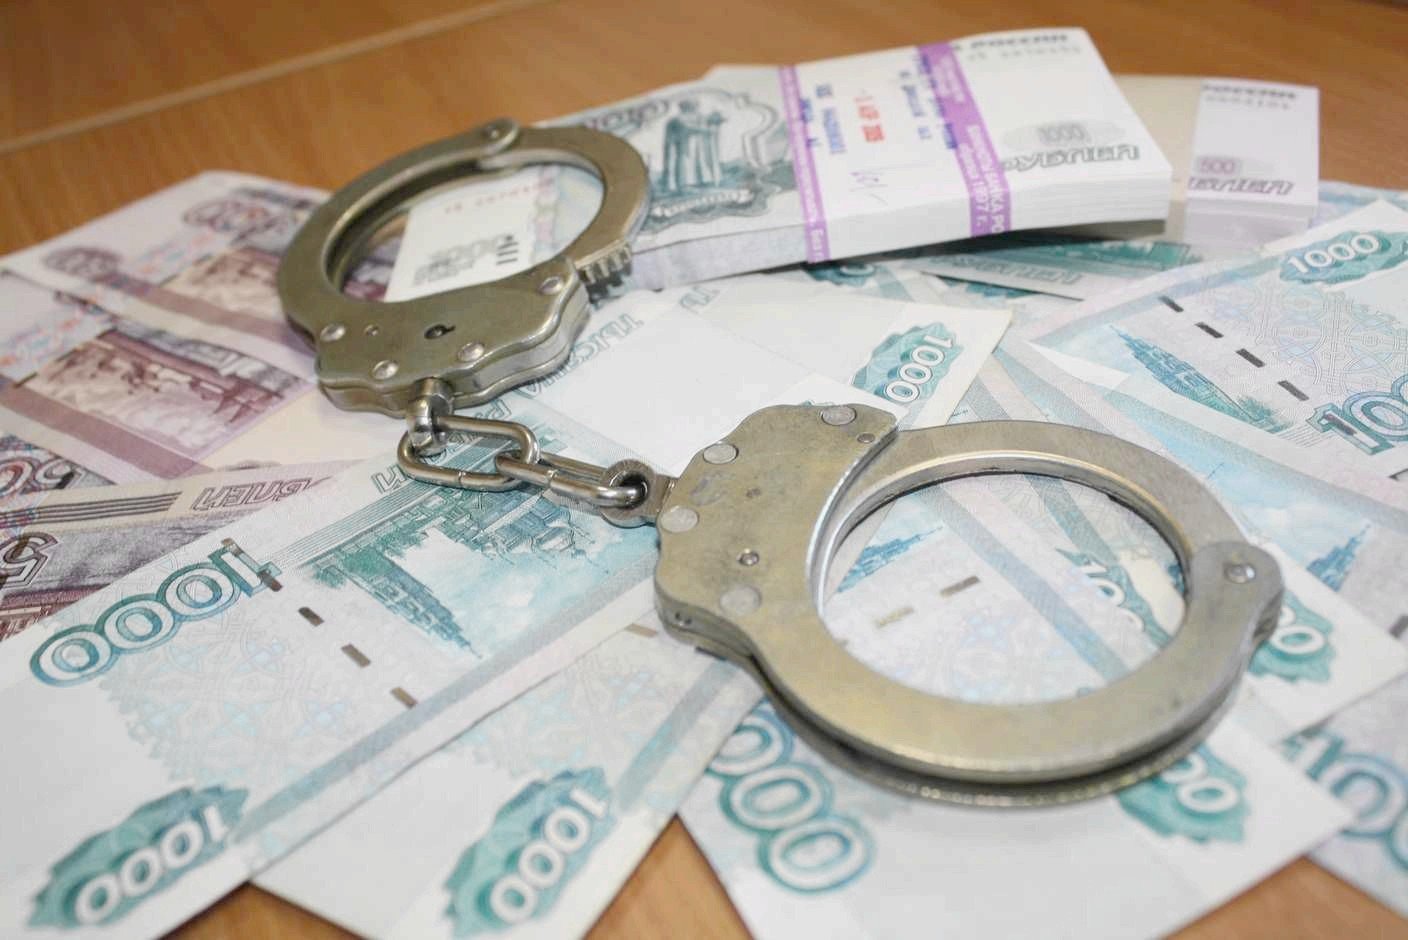 «Продавцы лекарств» похитили деньги из квартиры